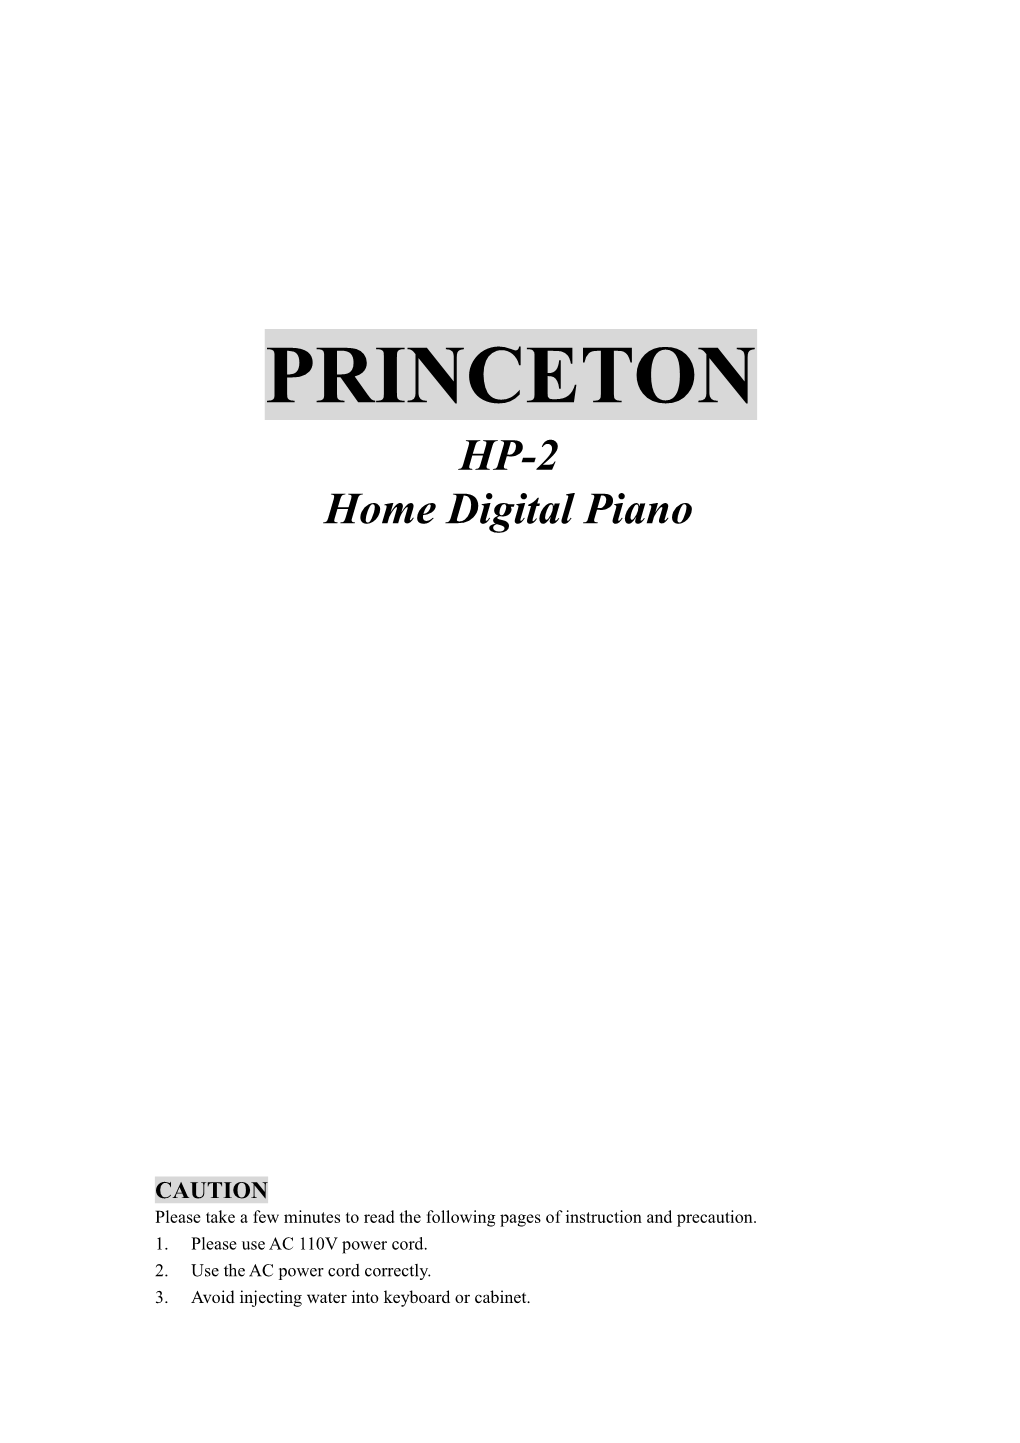 Home Digital Piano